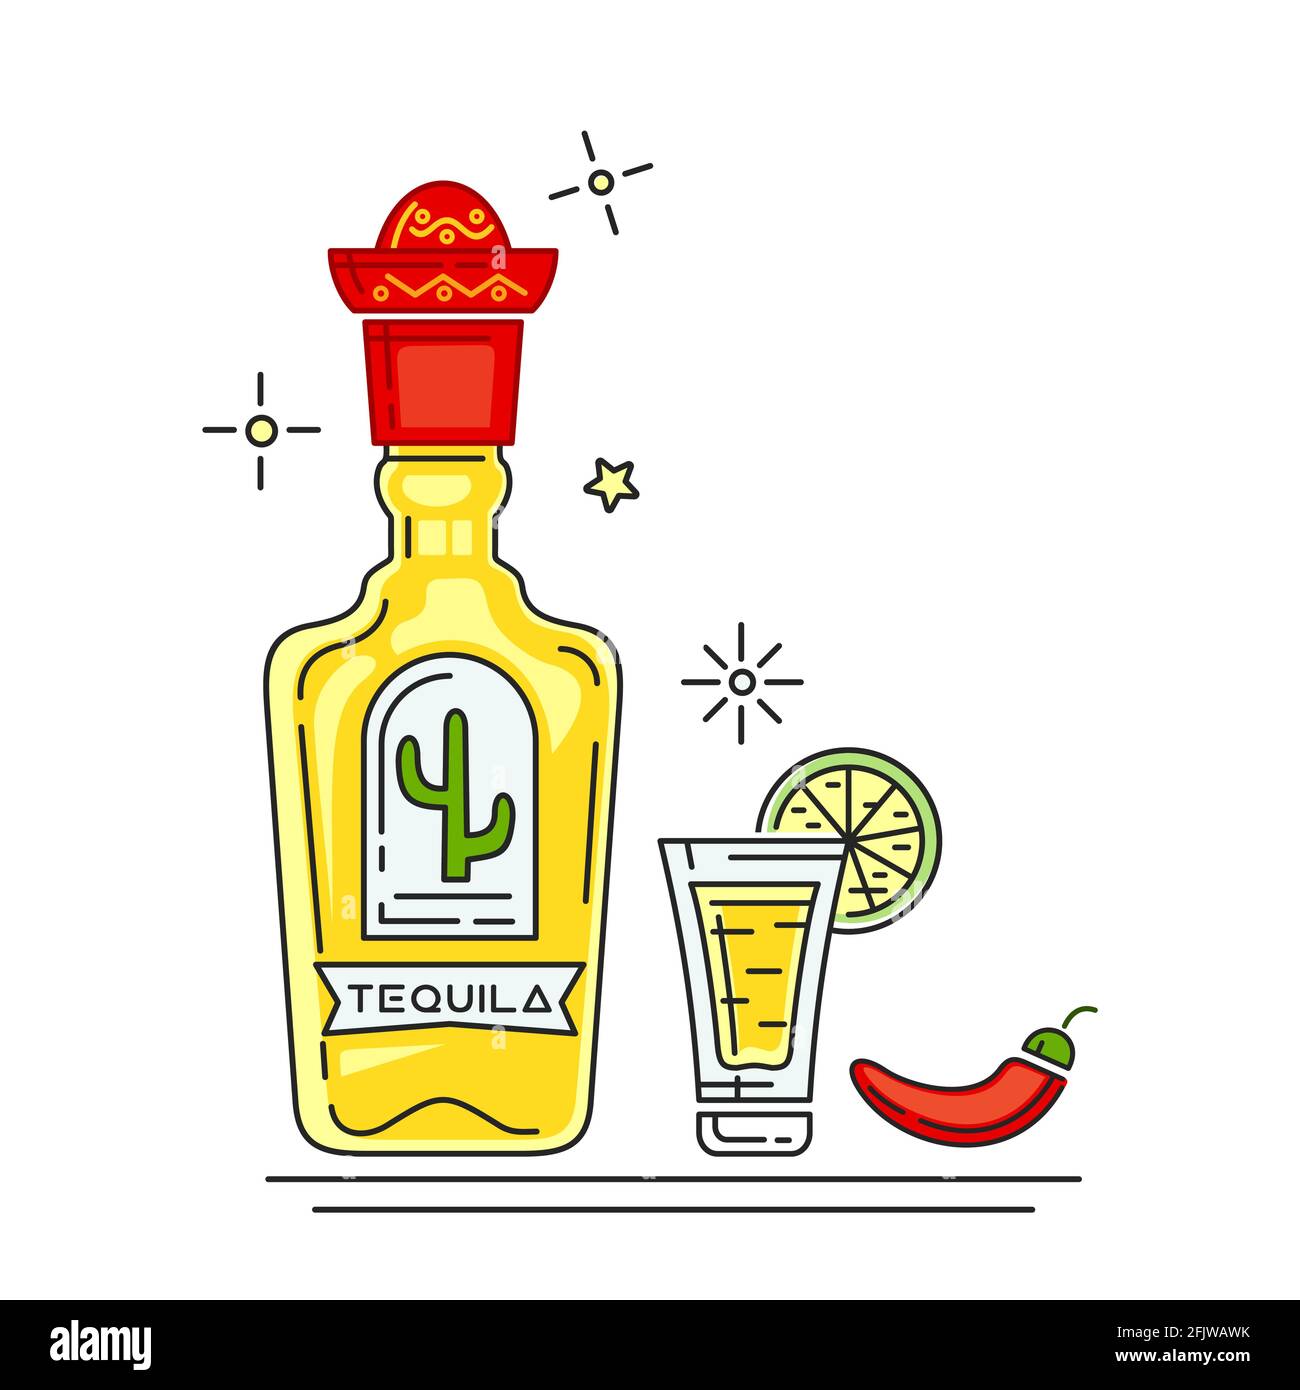 Tequila bottle icon flat, cartoon style isolated on white background. 